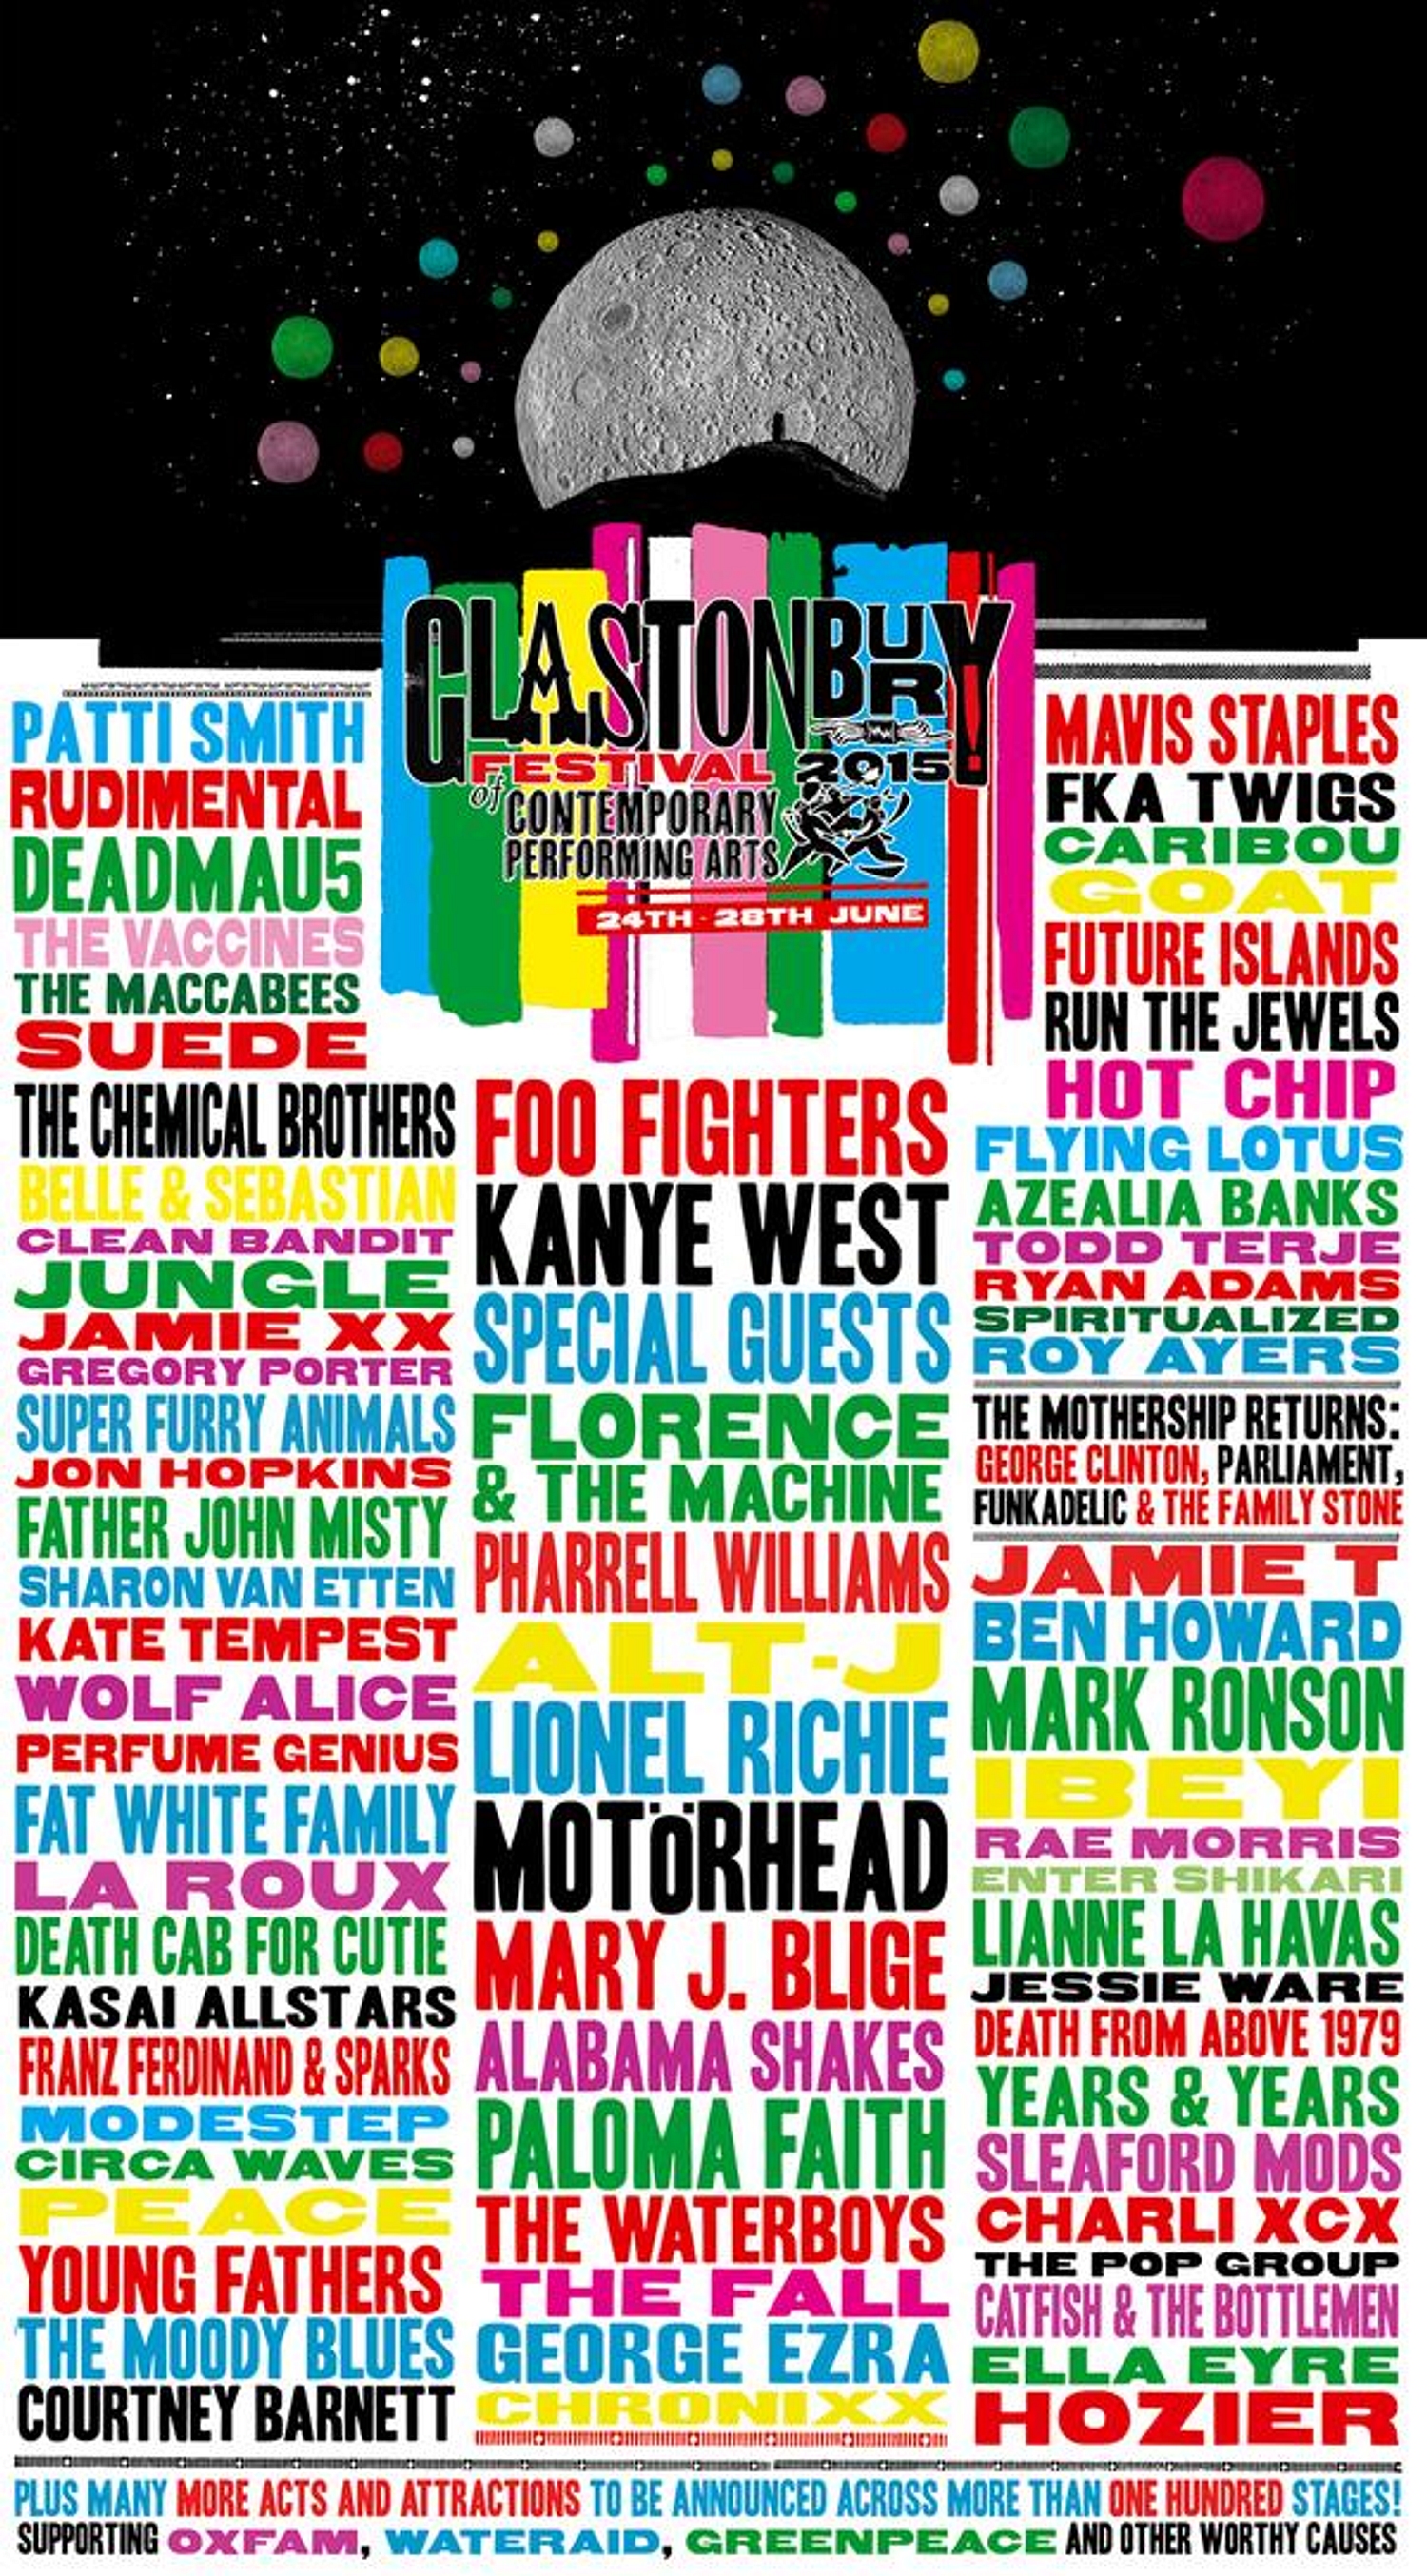 Glastonbury Festival announces Florence + The Machine, Alt-J, Caribou & more